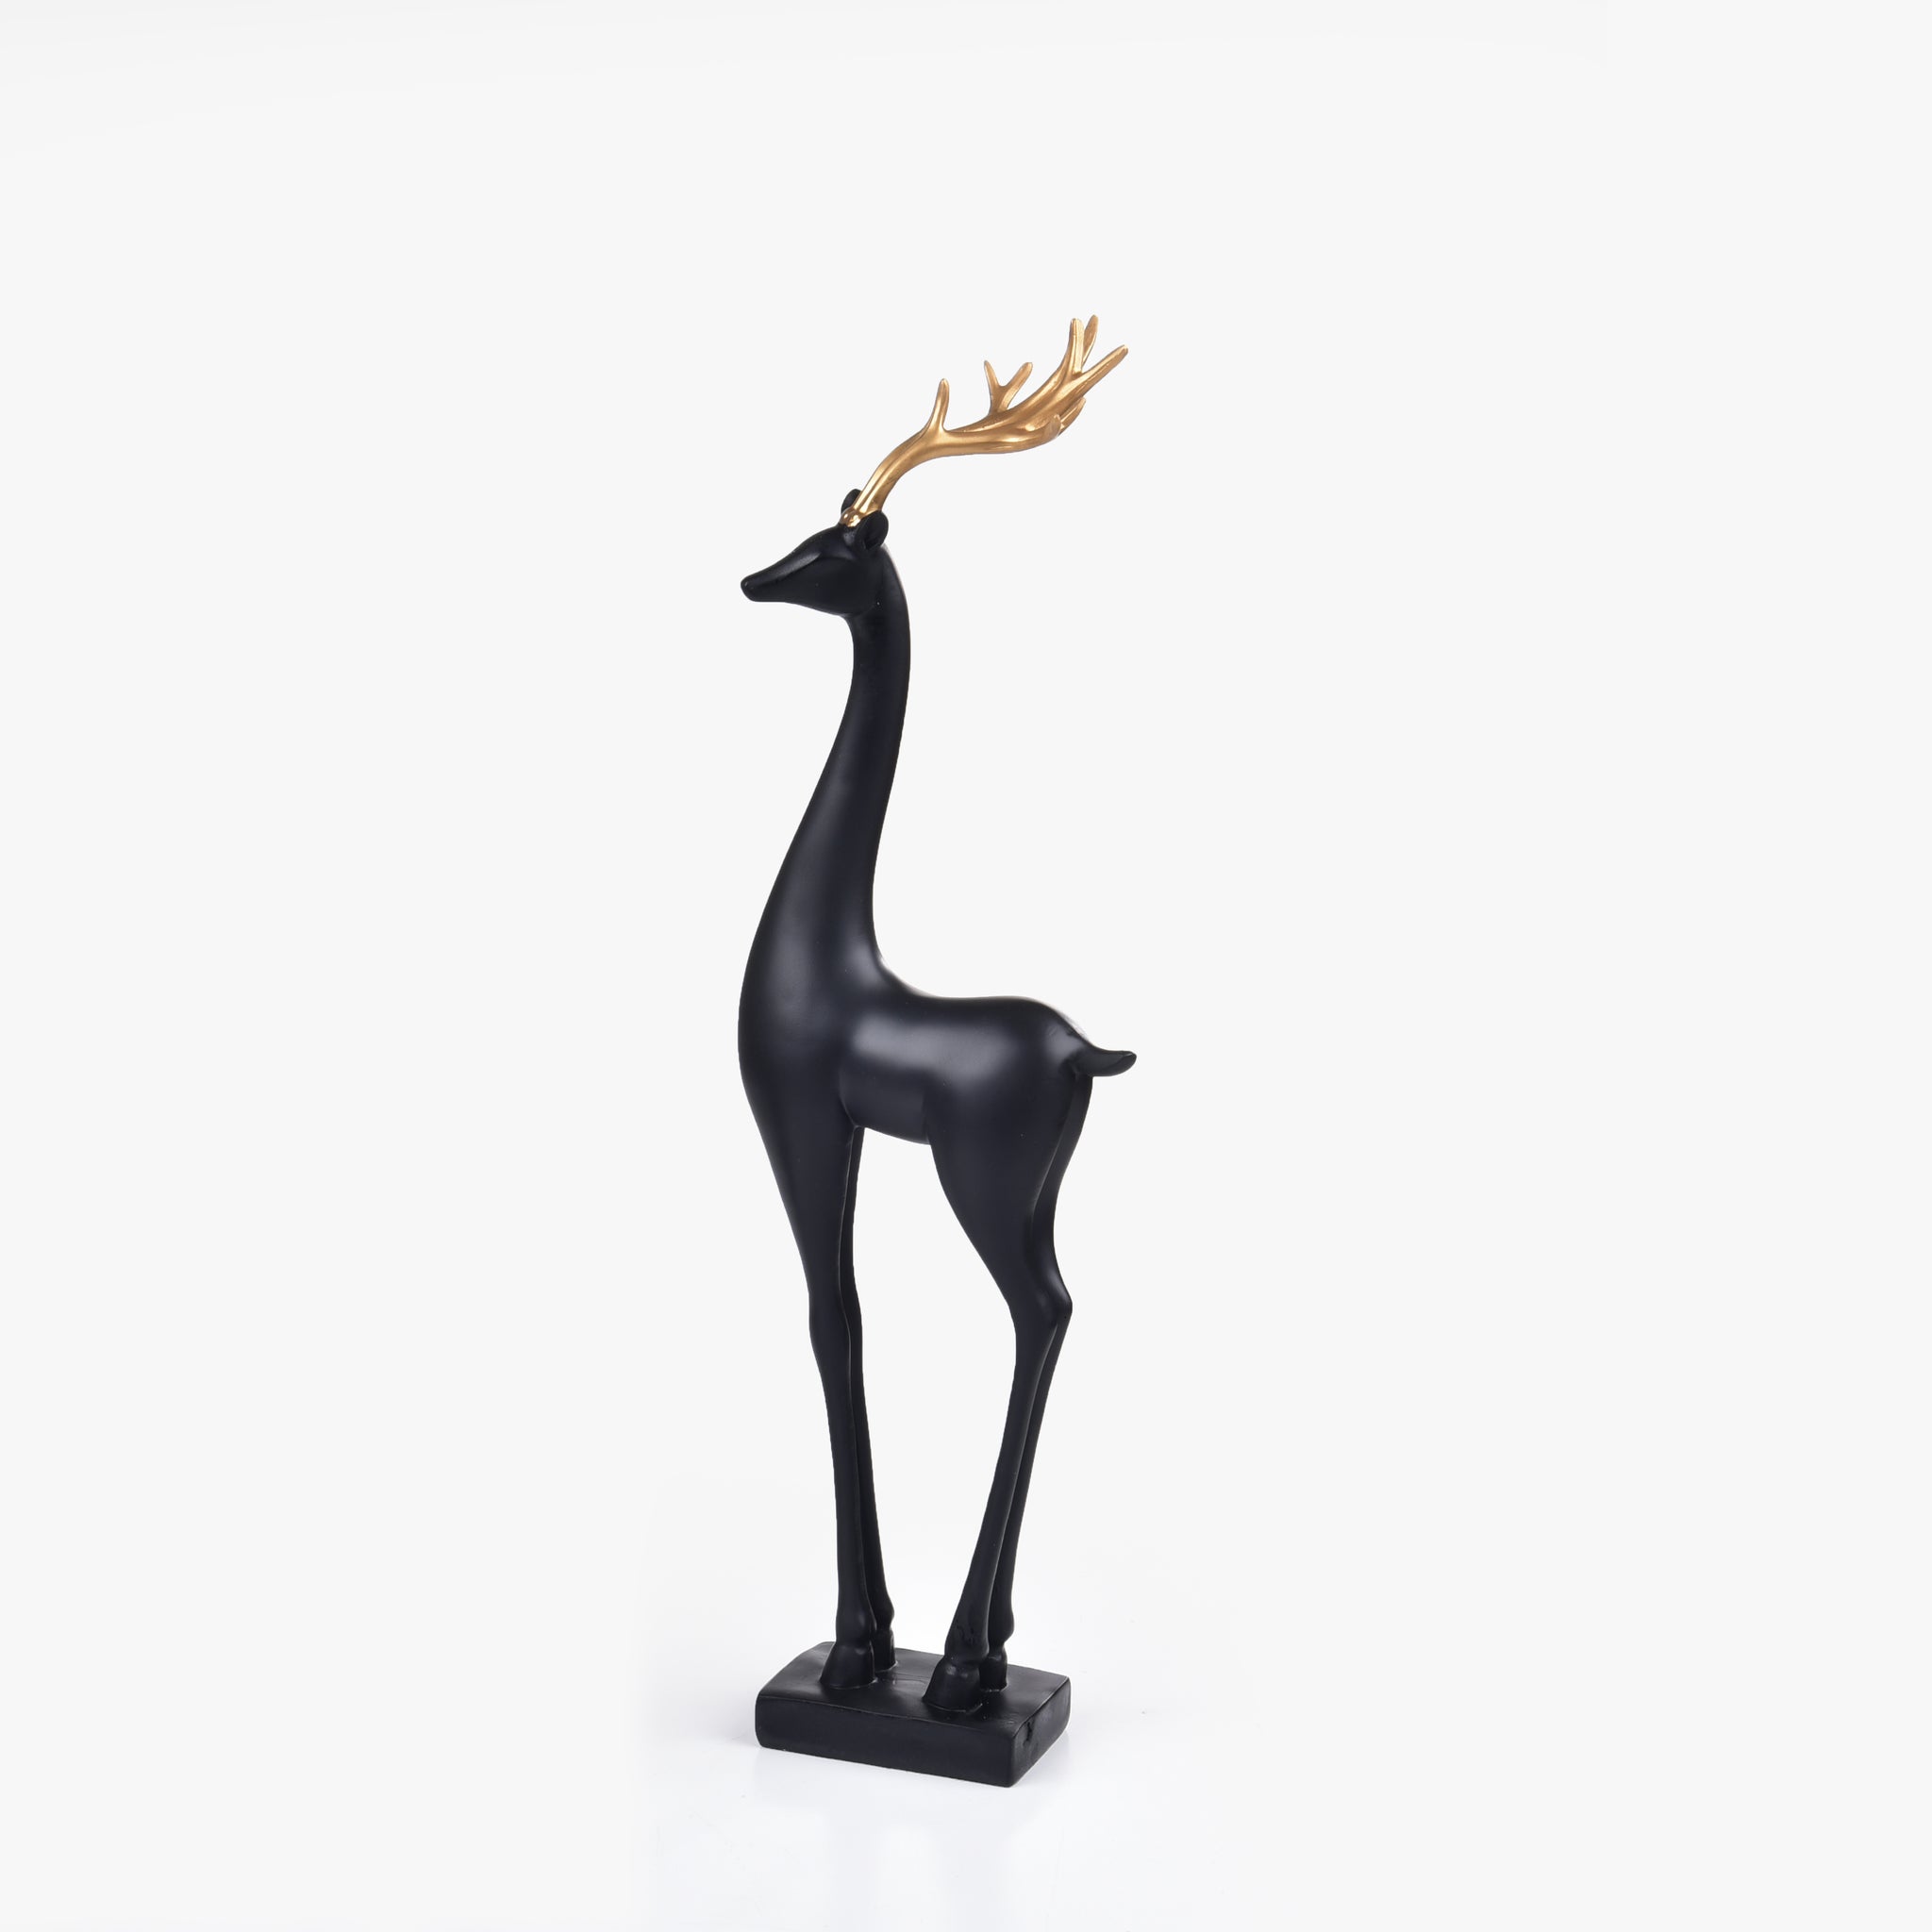 Discerning Black Deer Sculpture (pair)